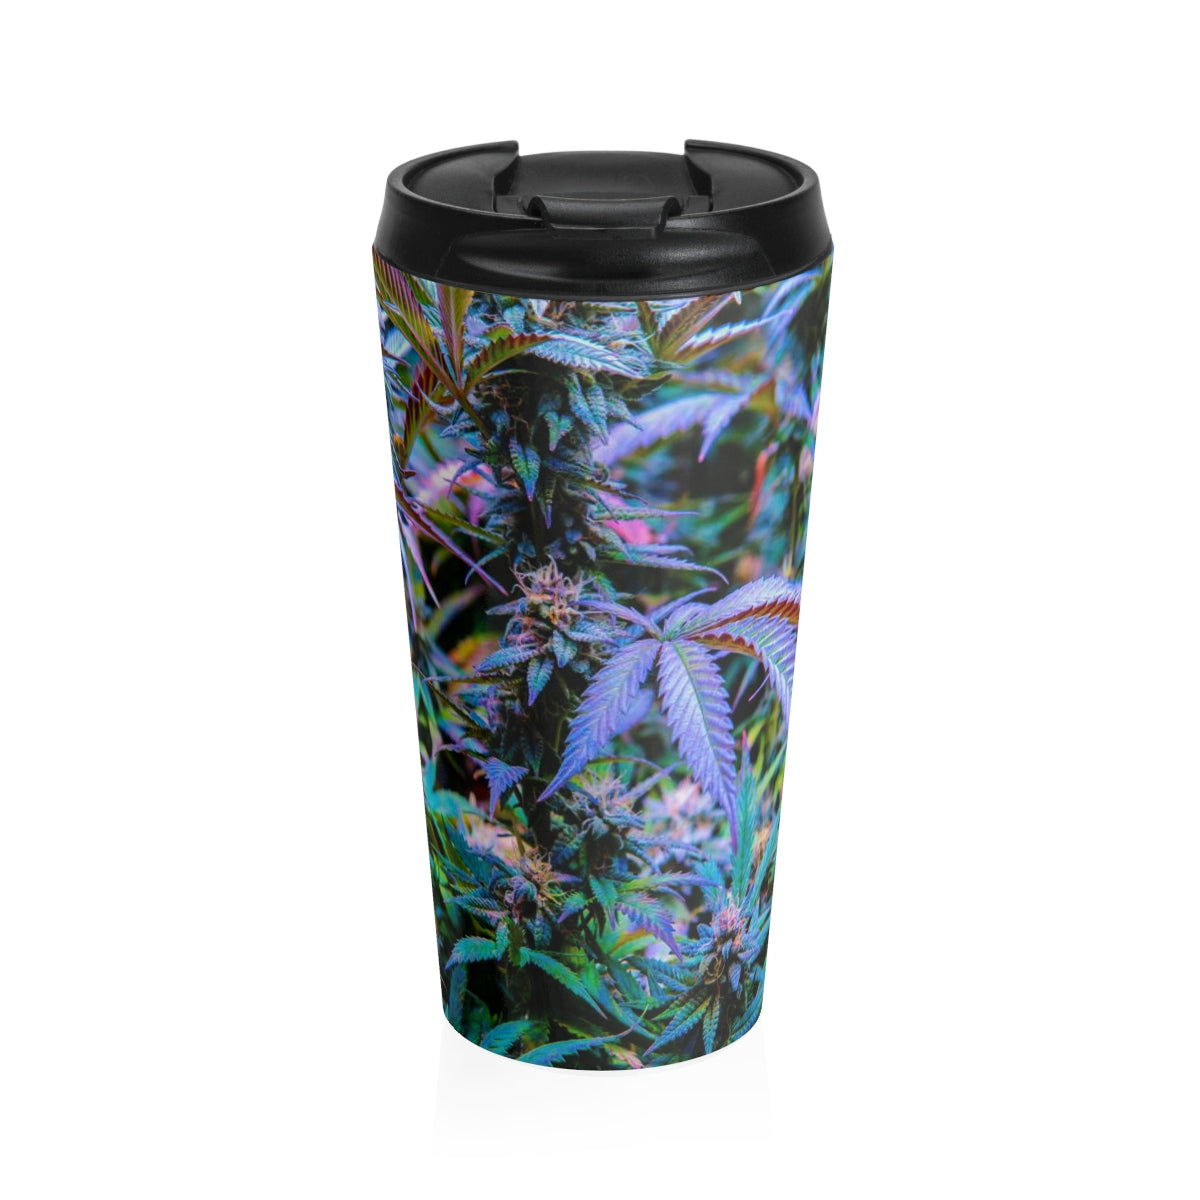 The Rainbow Cannabis Stainless Steel Travel Mug